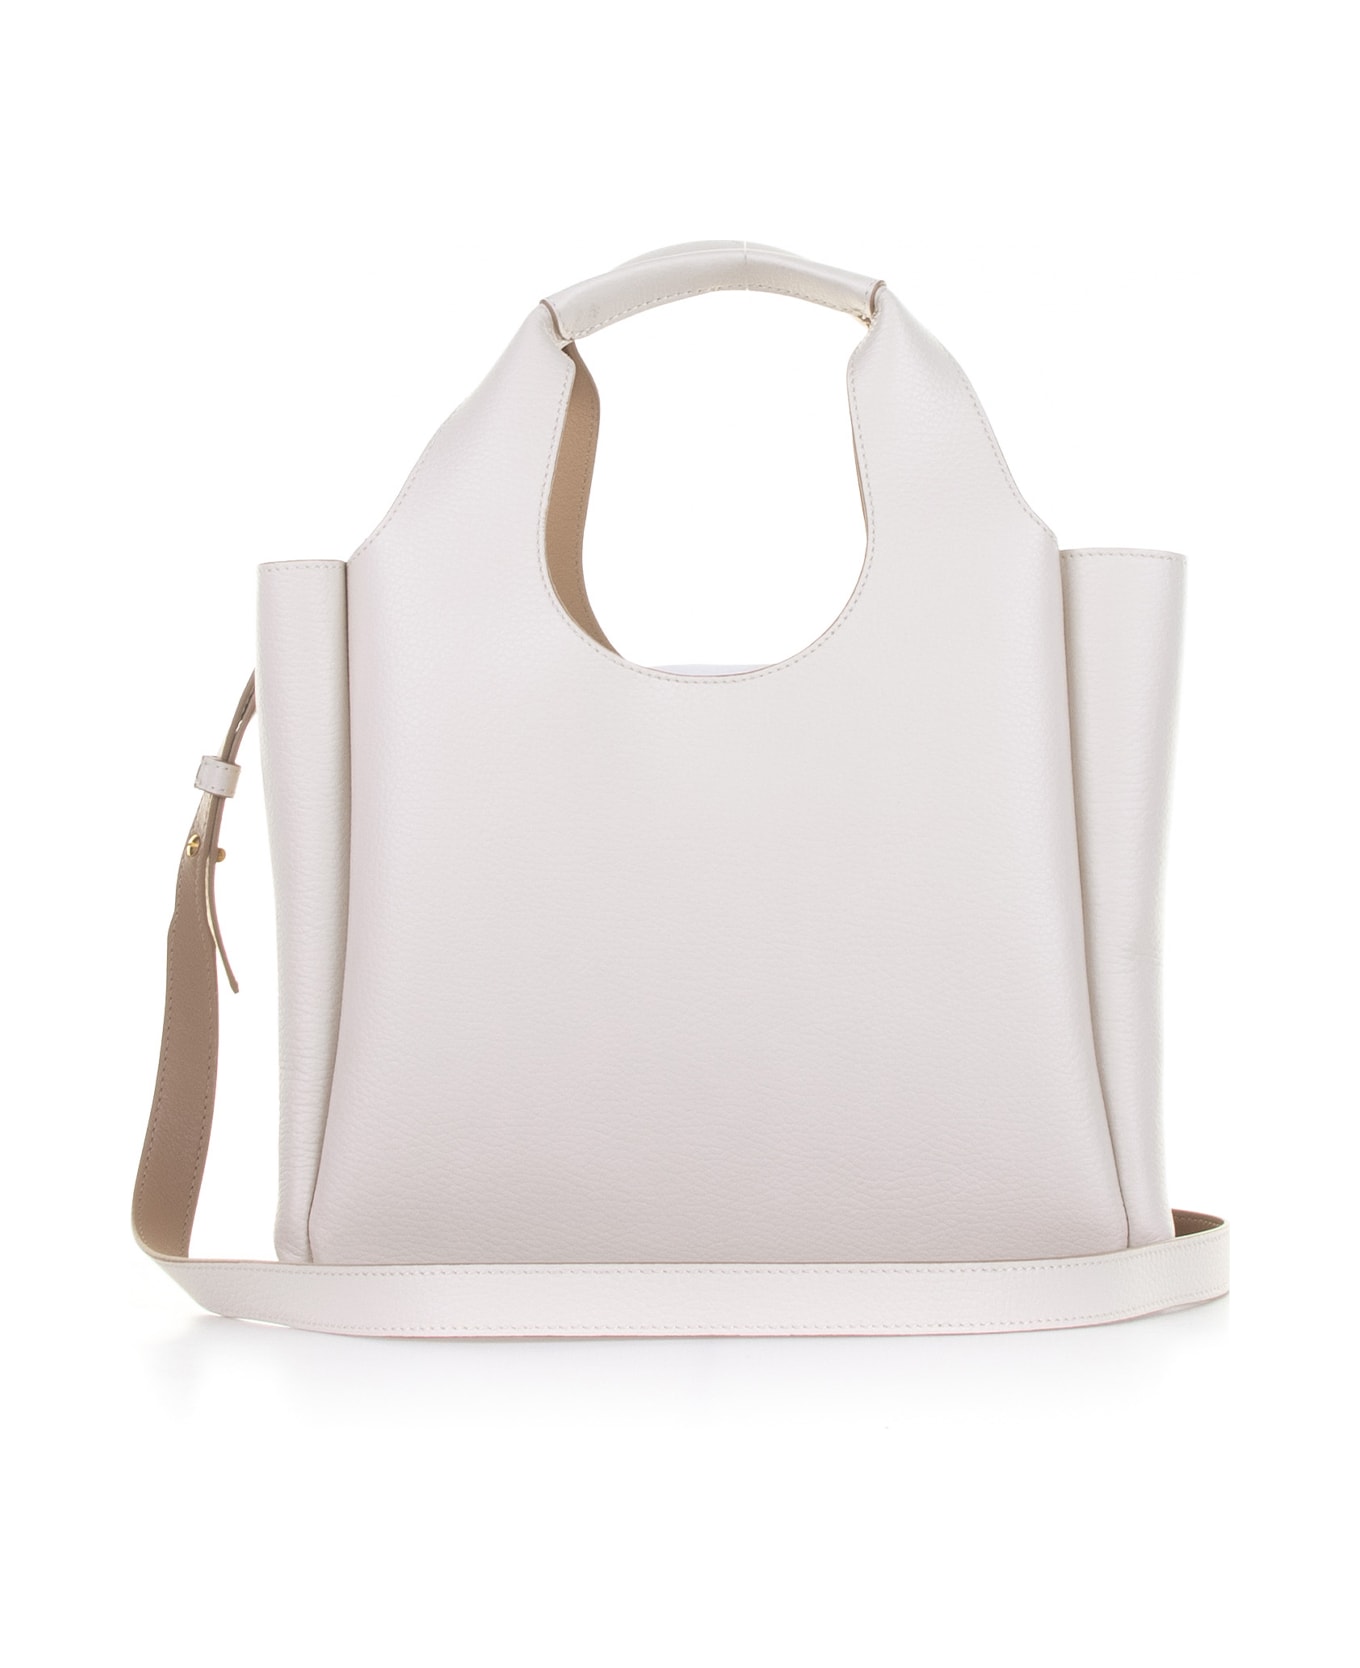 Hogan Small White Leather Shopping Bag - BIANCO MARMO